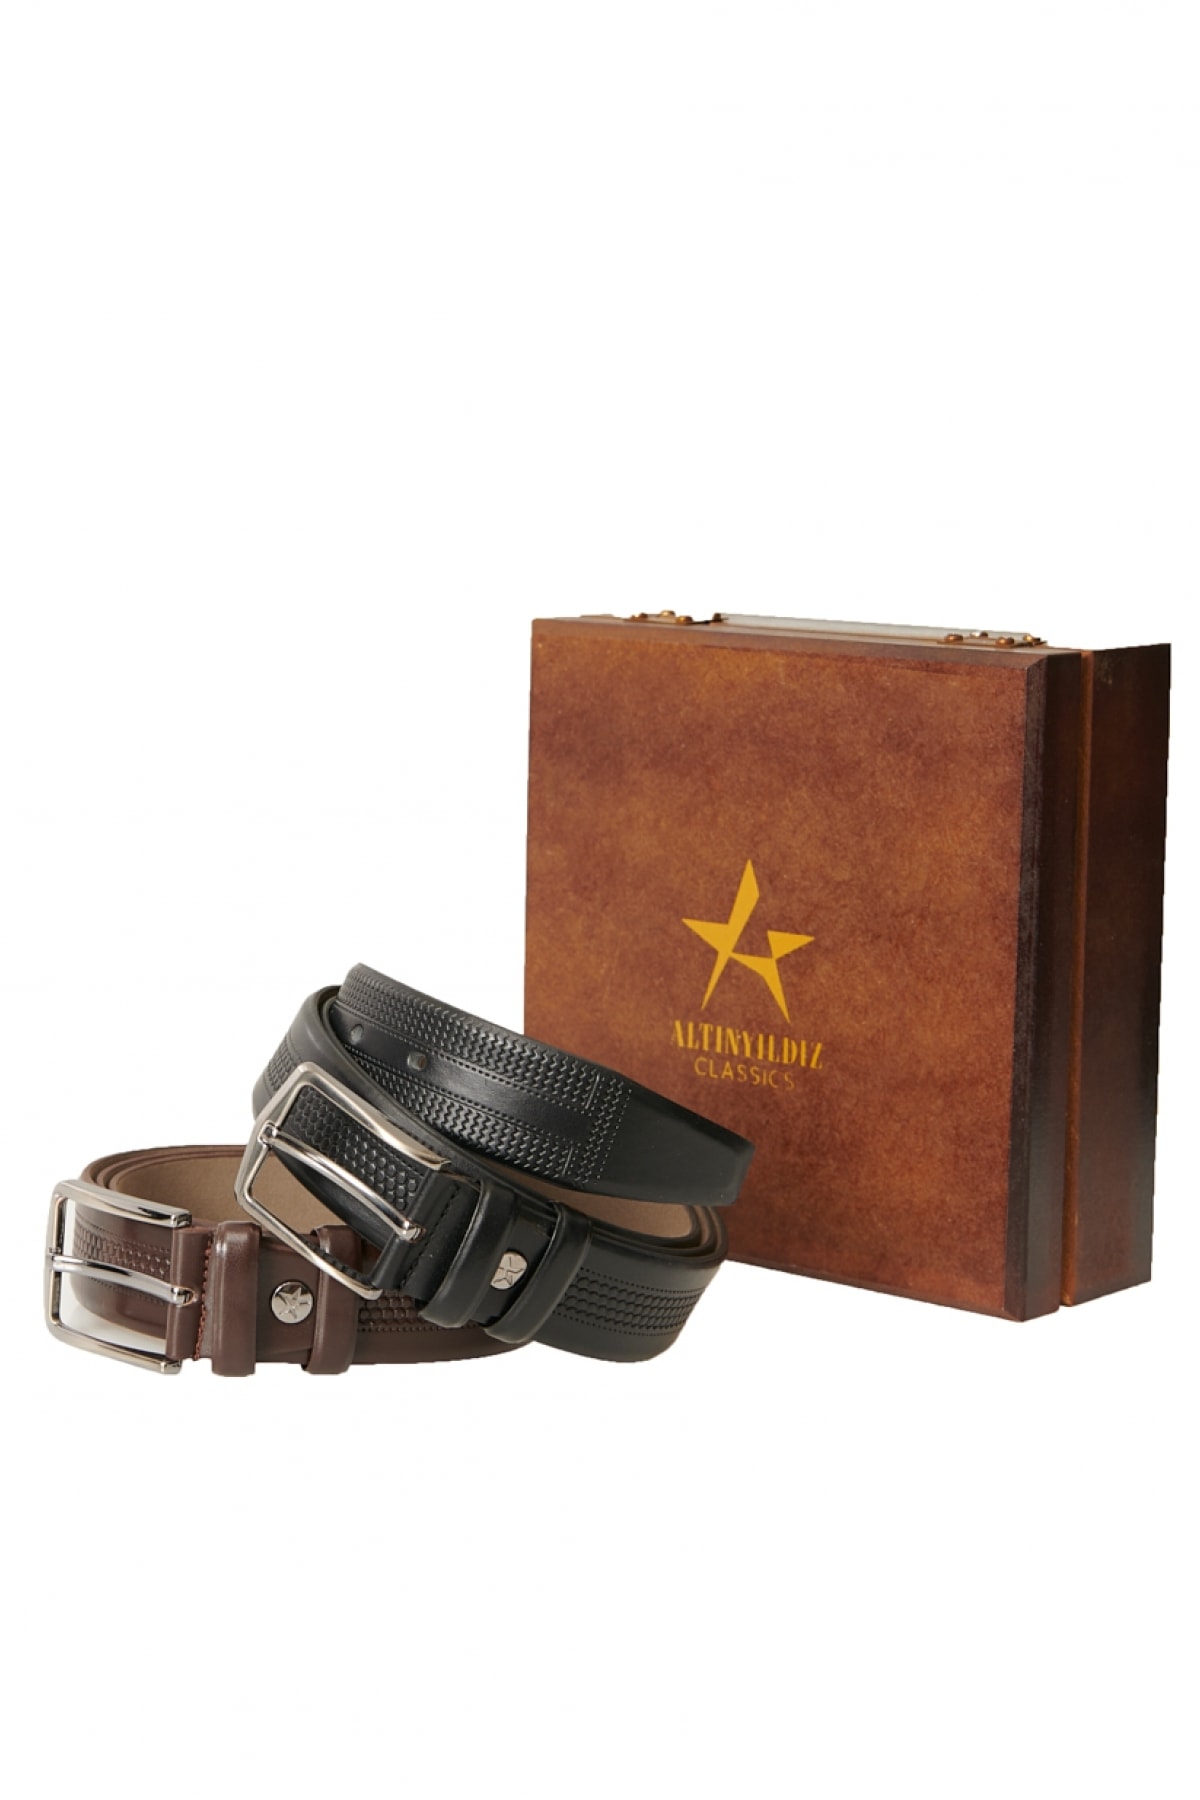 Levně ALTINYILDIZ CLASSICS Men's Black-Brown Special Wooden Gift Boxed 2-Piece Suit Belt Groom's Pack